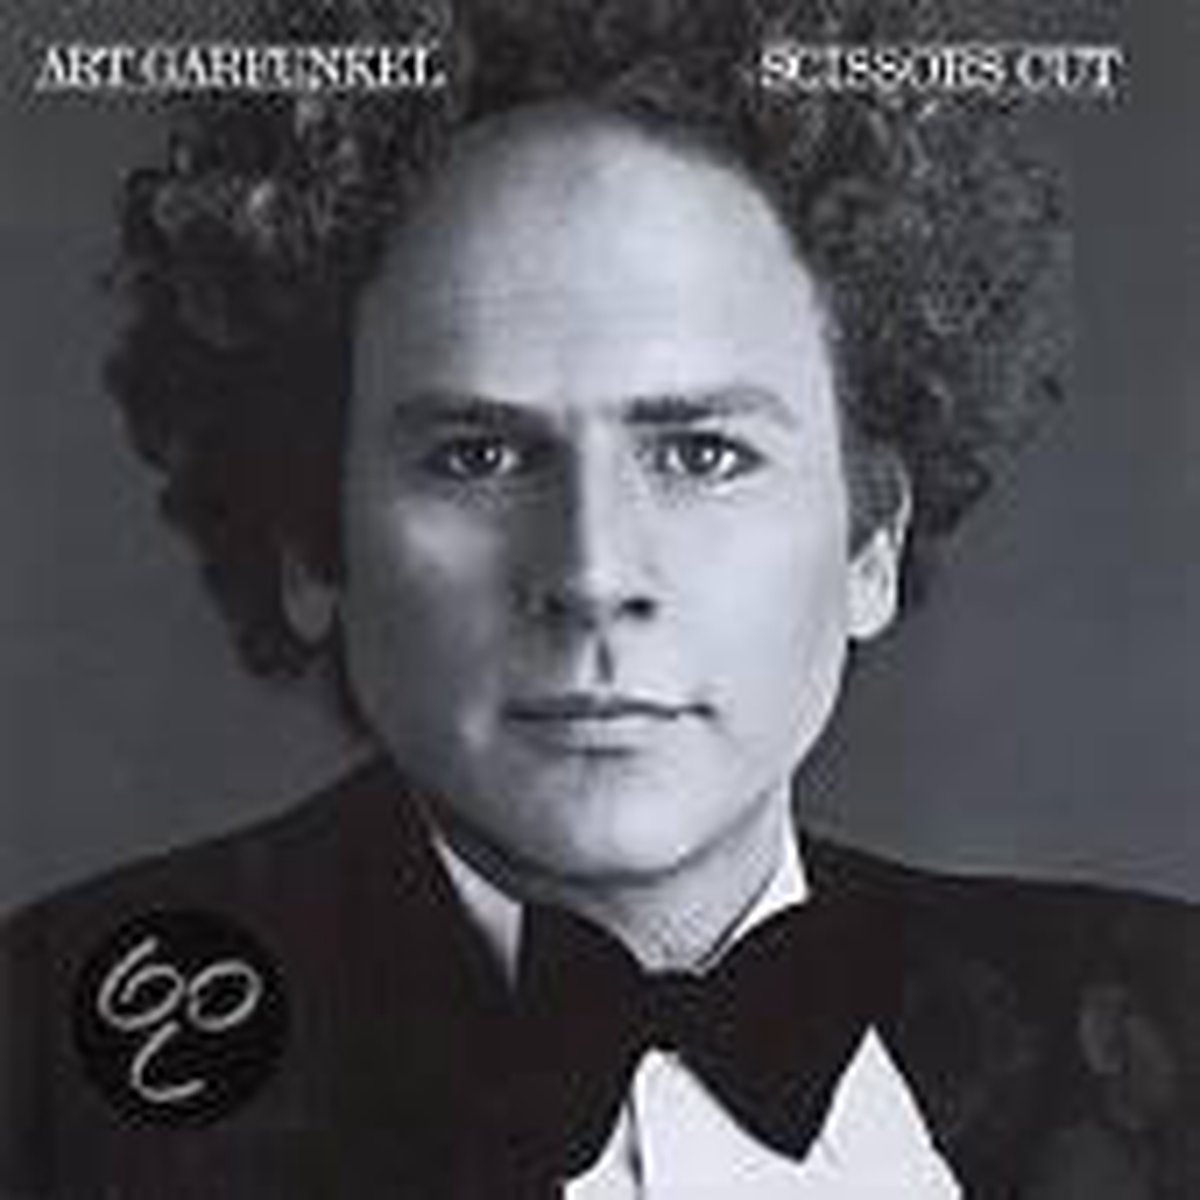 Scissors Cut - Art Garfunkel